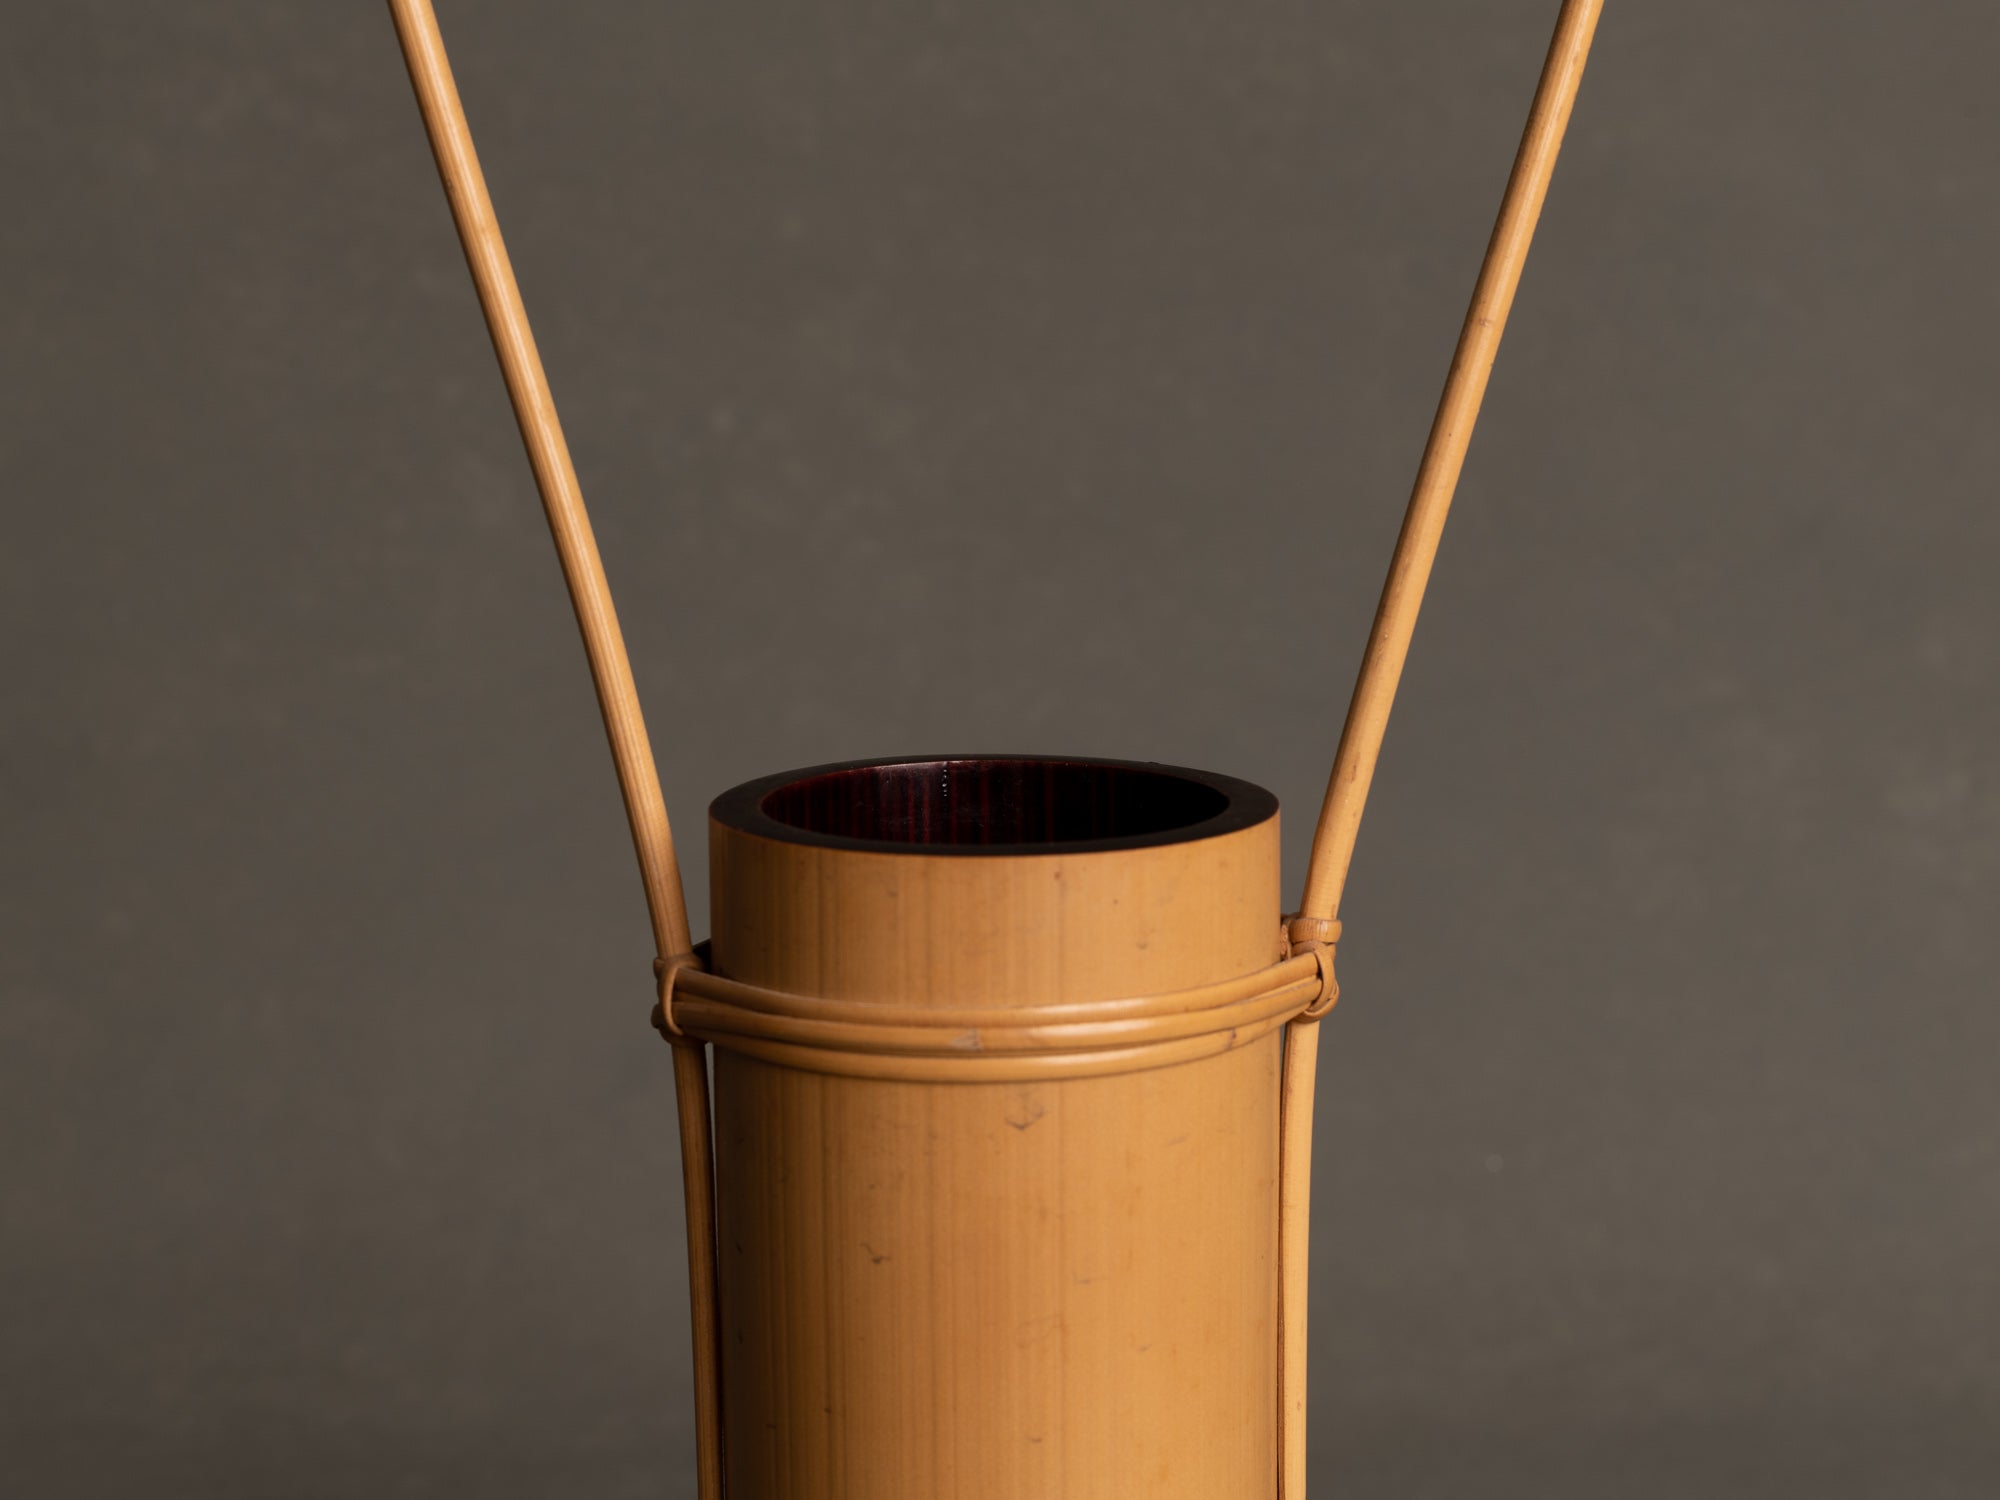 Kayoi tsudzu hanaire, vase en bambou pour la cérémonie du thé, suiveur de Shōno Shōunsai, Japon (Ère Shōwa)..Kayoi tsudzu hanaire, Shōno Shōunsai style madake Bamboo flower vase for tea ceremony chabana, Japan (Shōwa era)